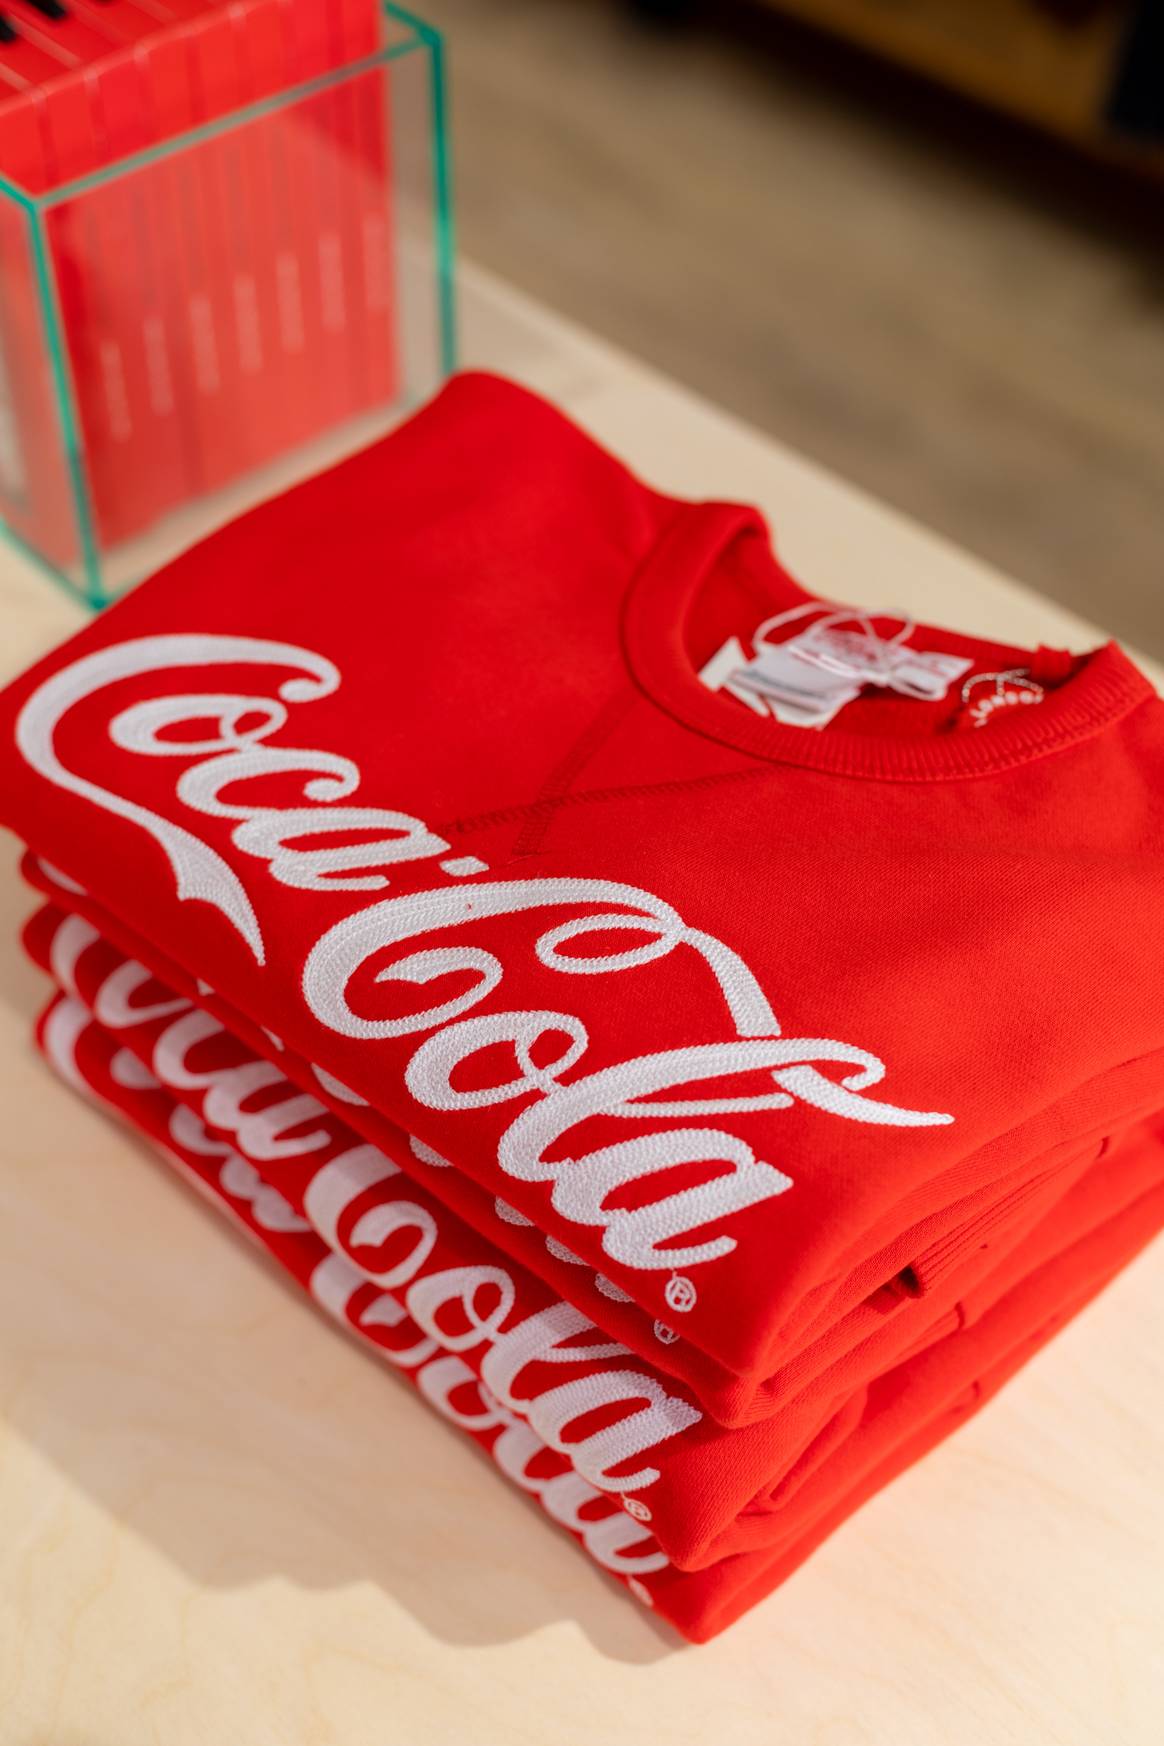 Image: Coca Cola